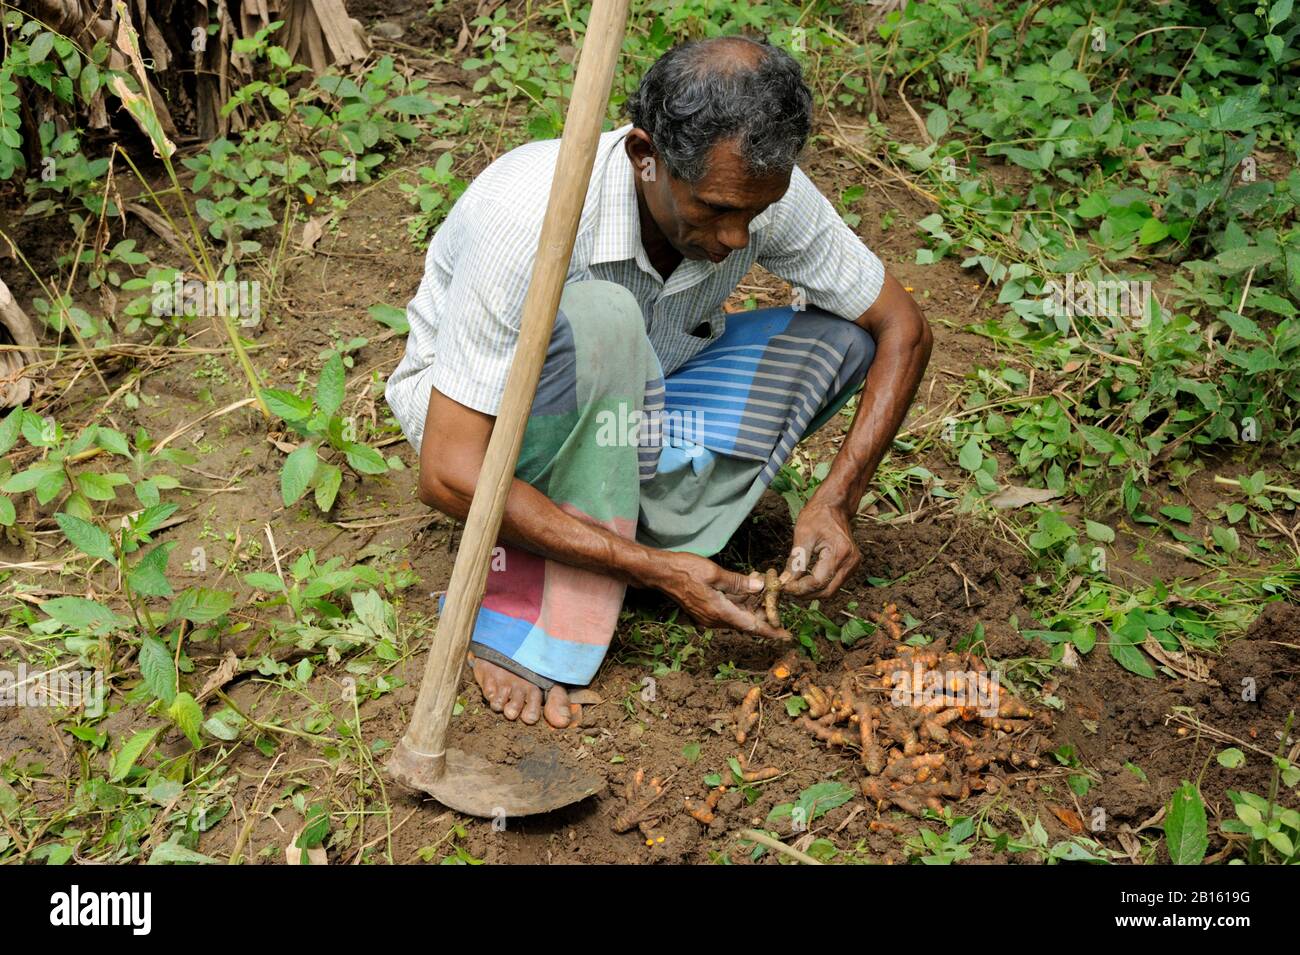 Sri Lanka, Uva province, Badalkumbura district, farmer harvesting turmeric Stock Photo